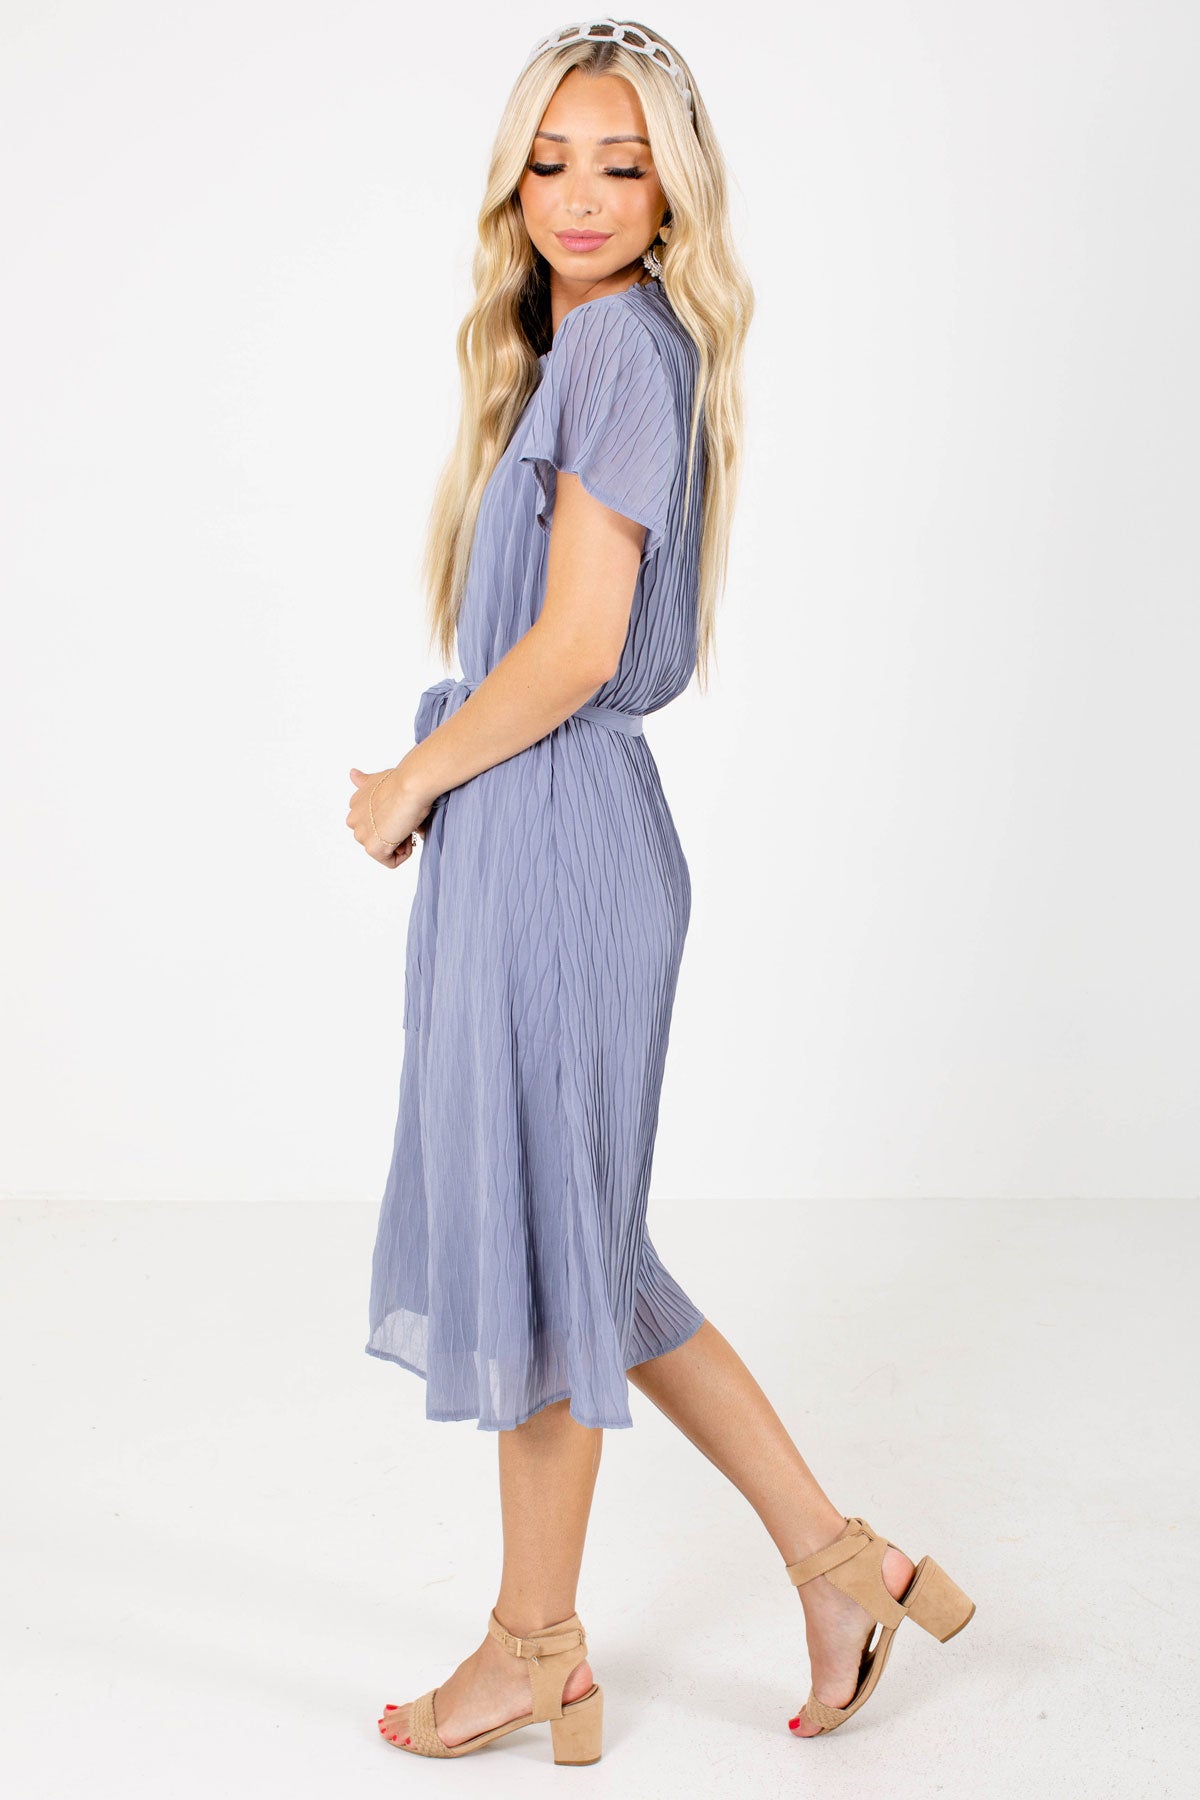 Women's Blue Business Casual Boutique Knee-Length Dress